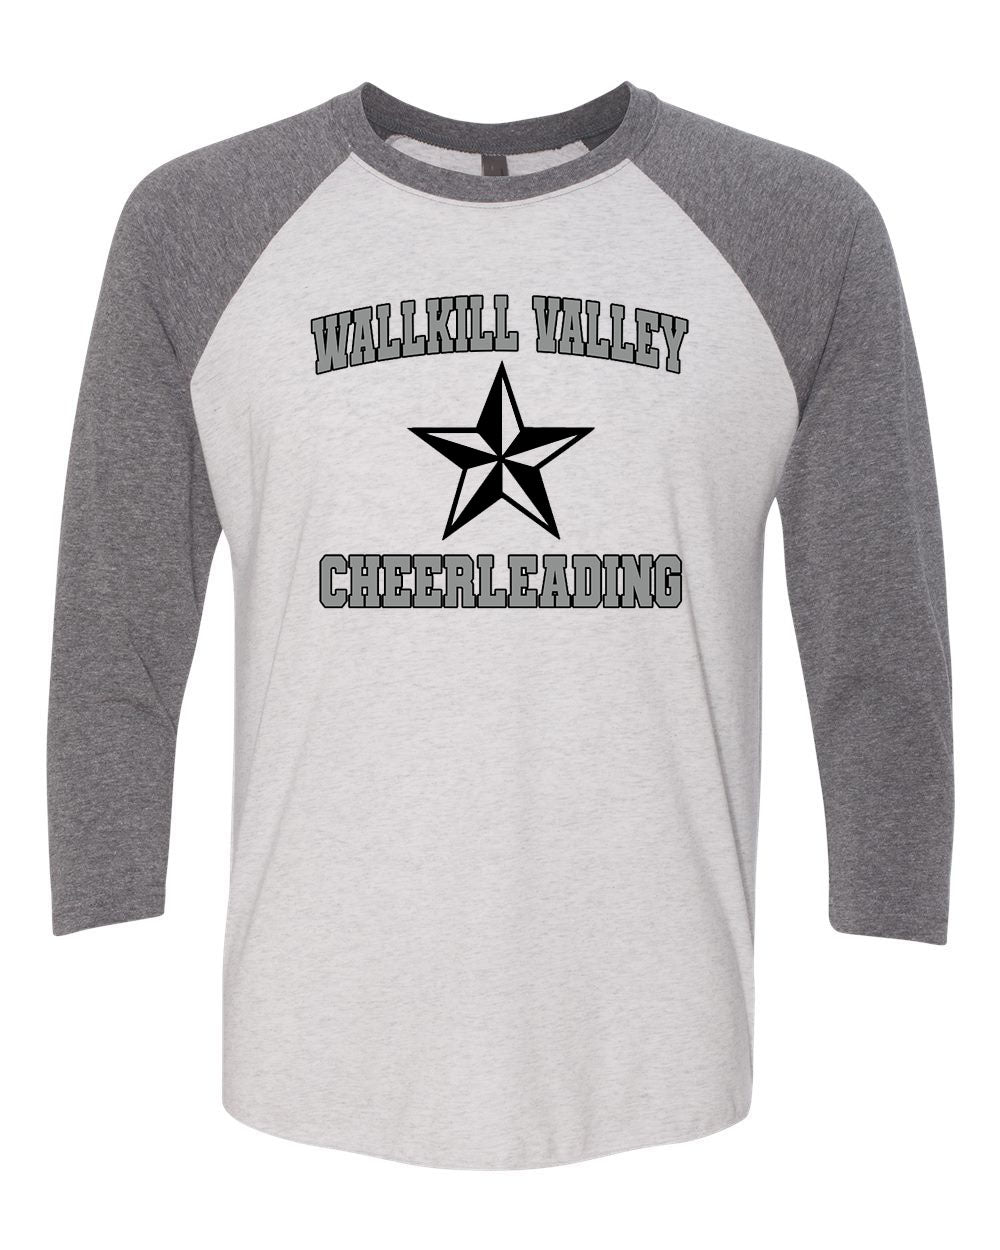 Wallkill Cheer Design 6 raglan shirt